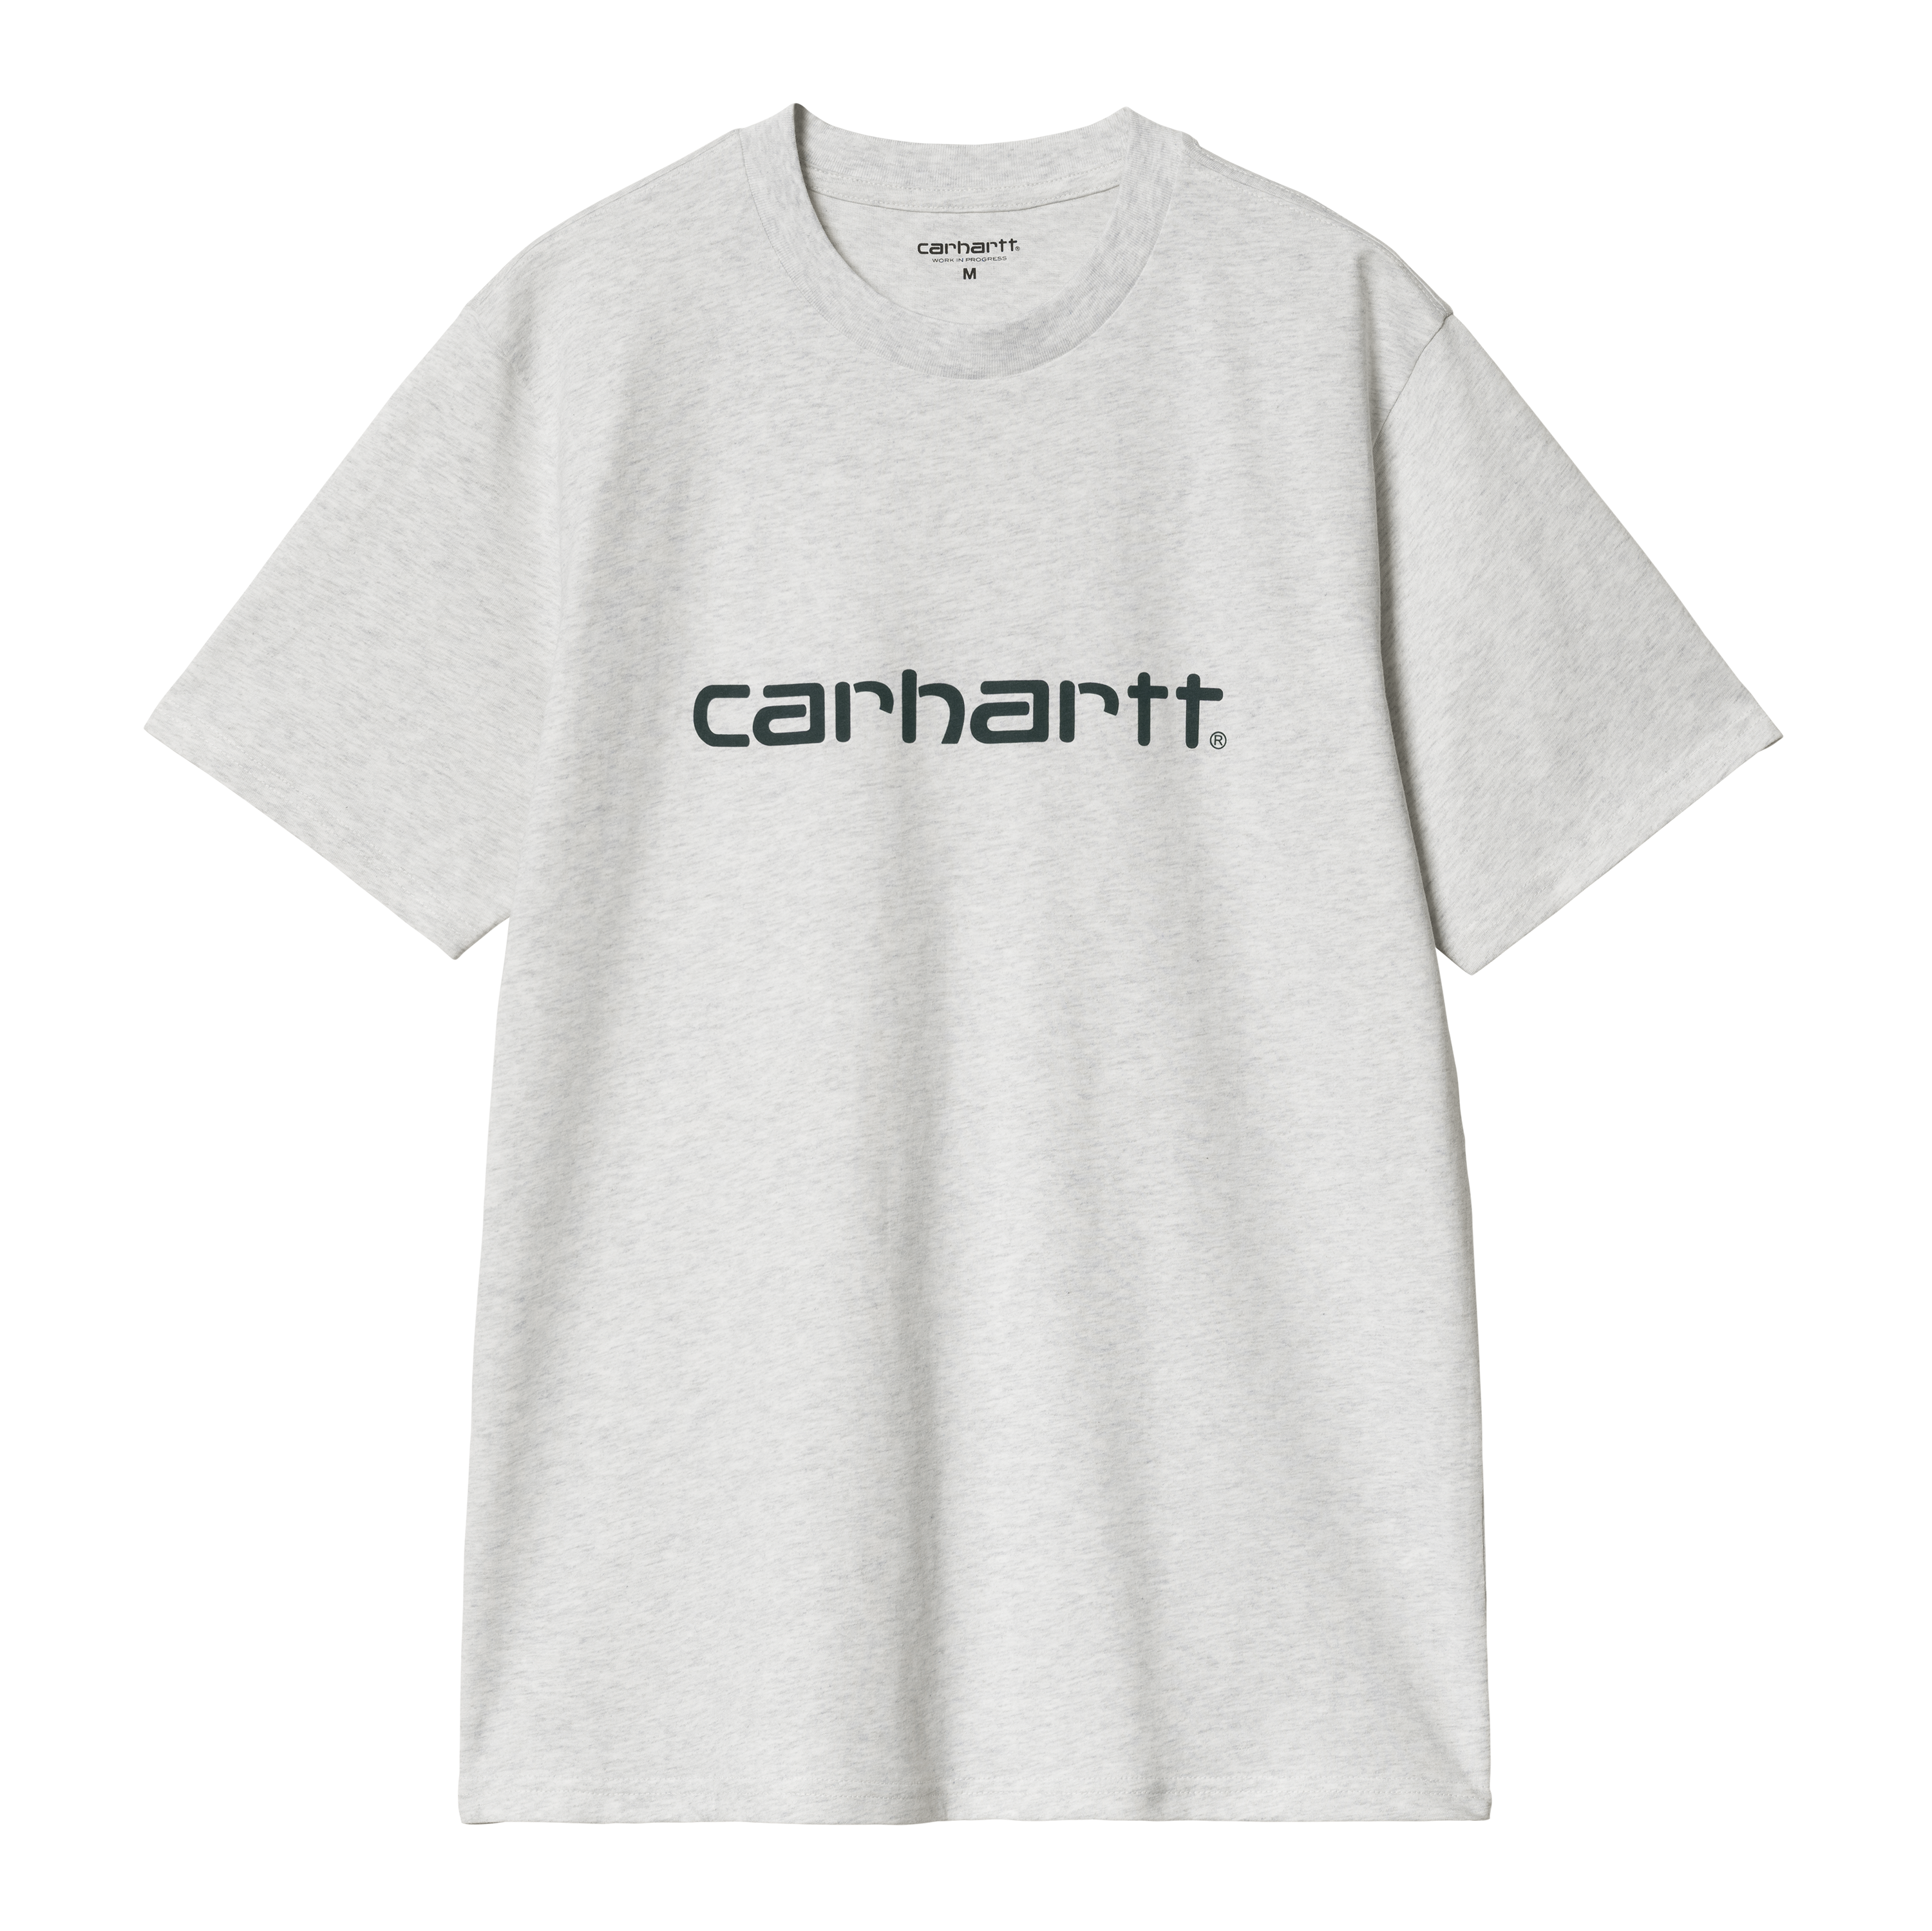 Carhartt WIP Short Sleeve Script T-Shirt in Grey